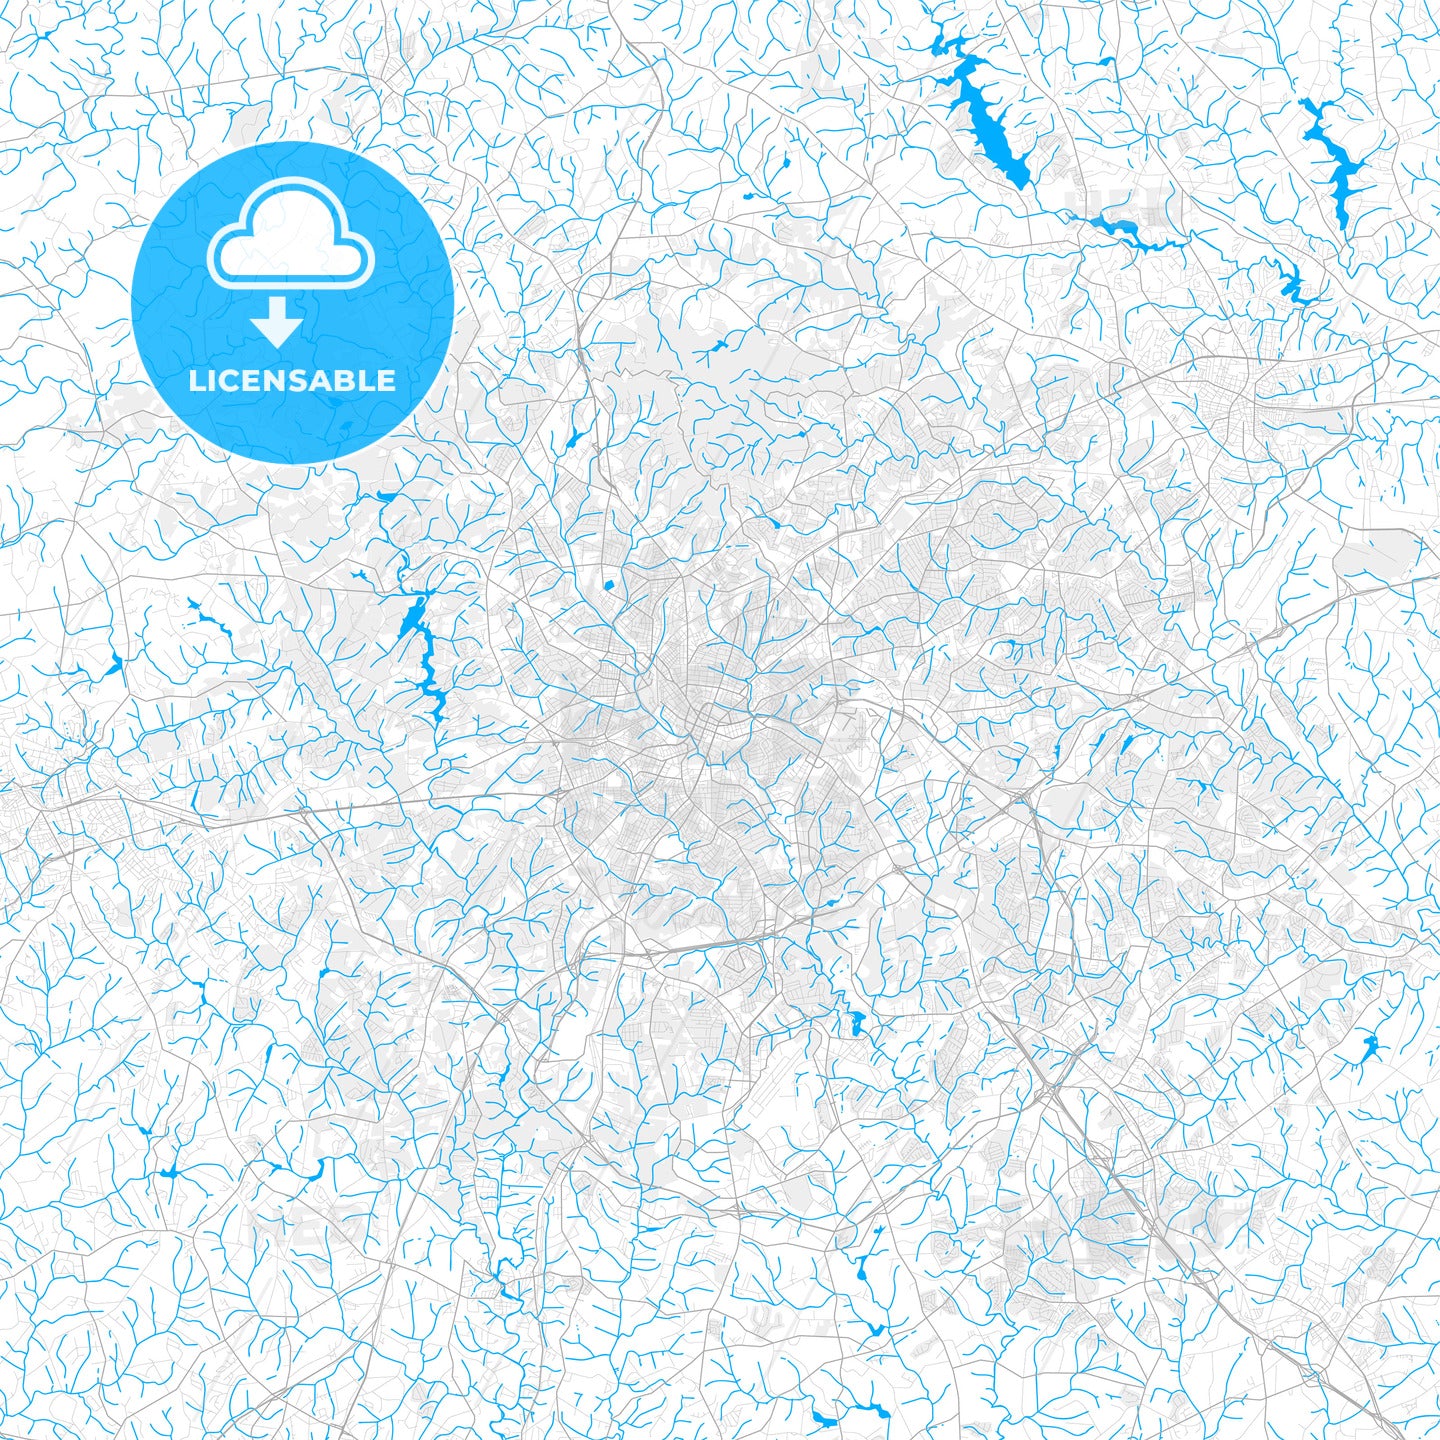 Rich detailed vector map of Greenville, South Carolina, USA